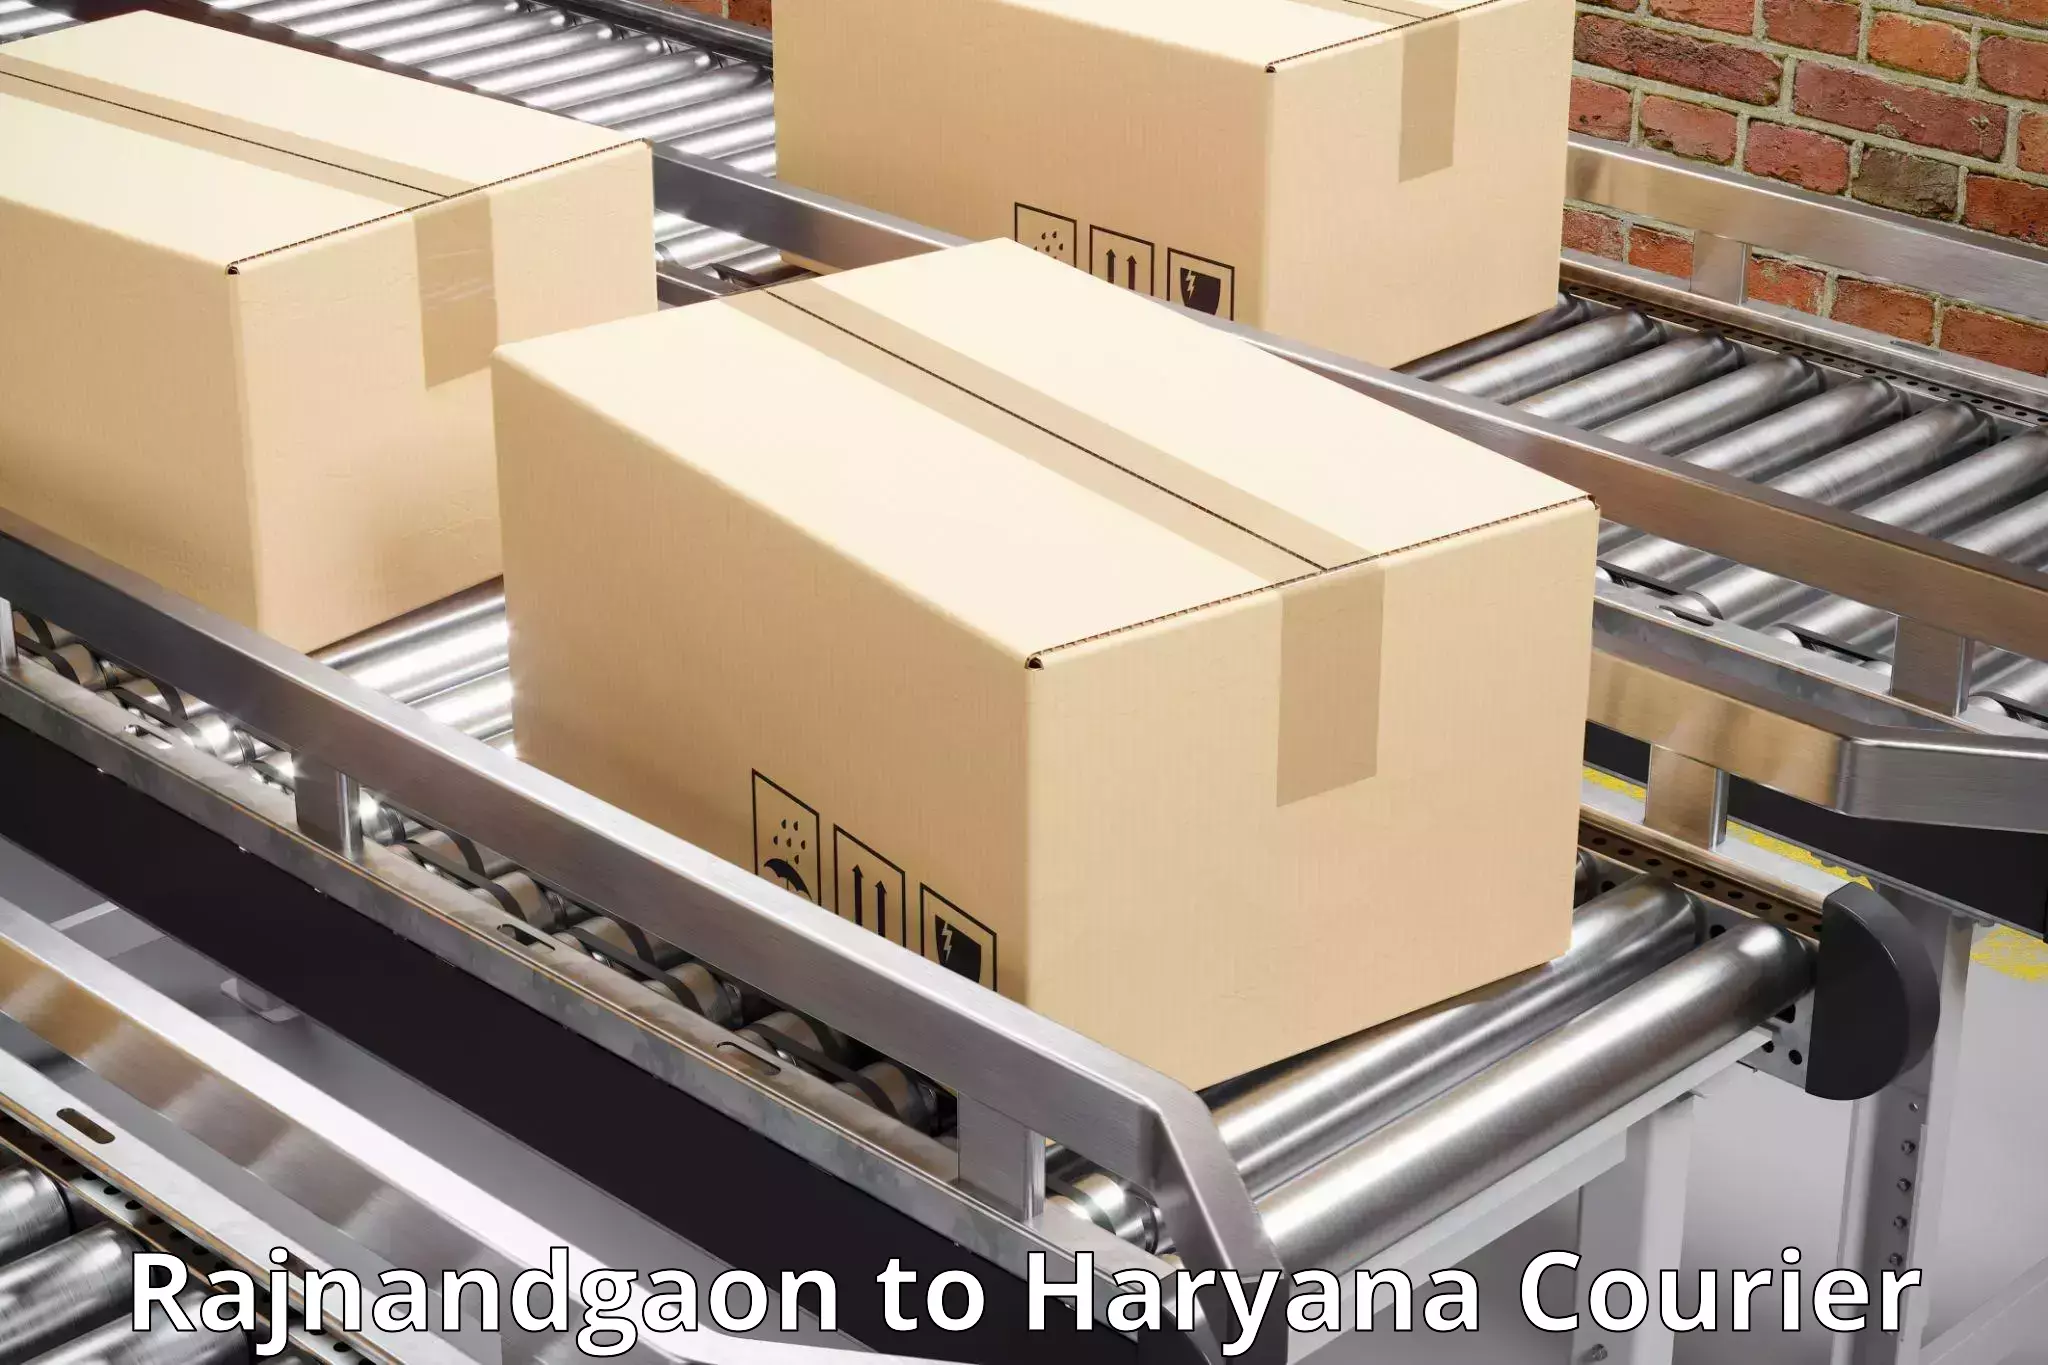 Courier service comparison Rajnandgaon to Haryana